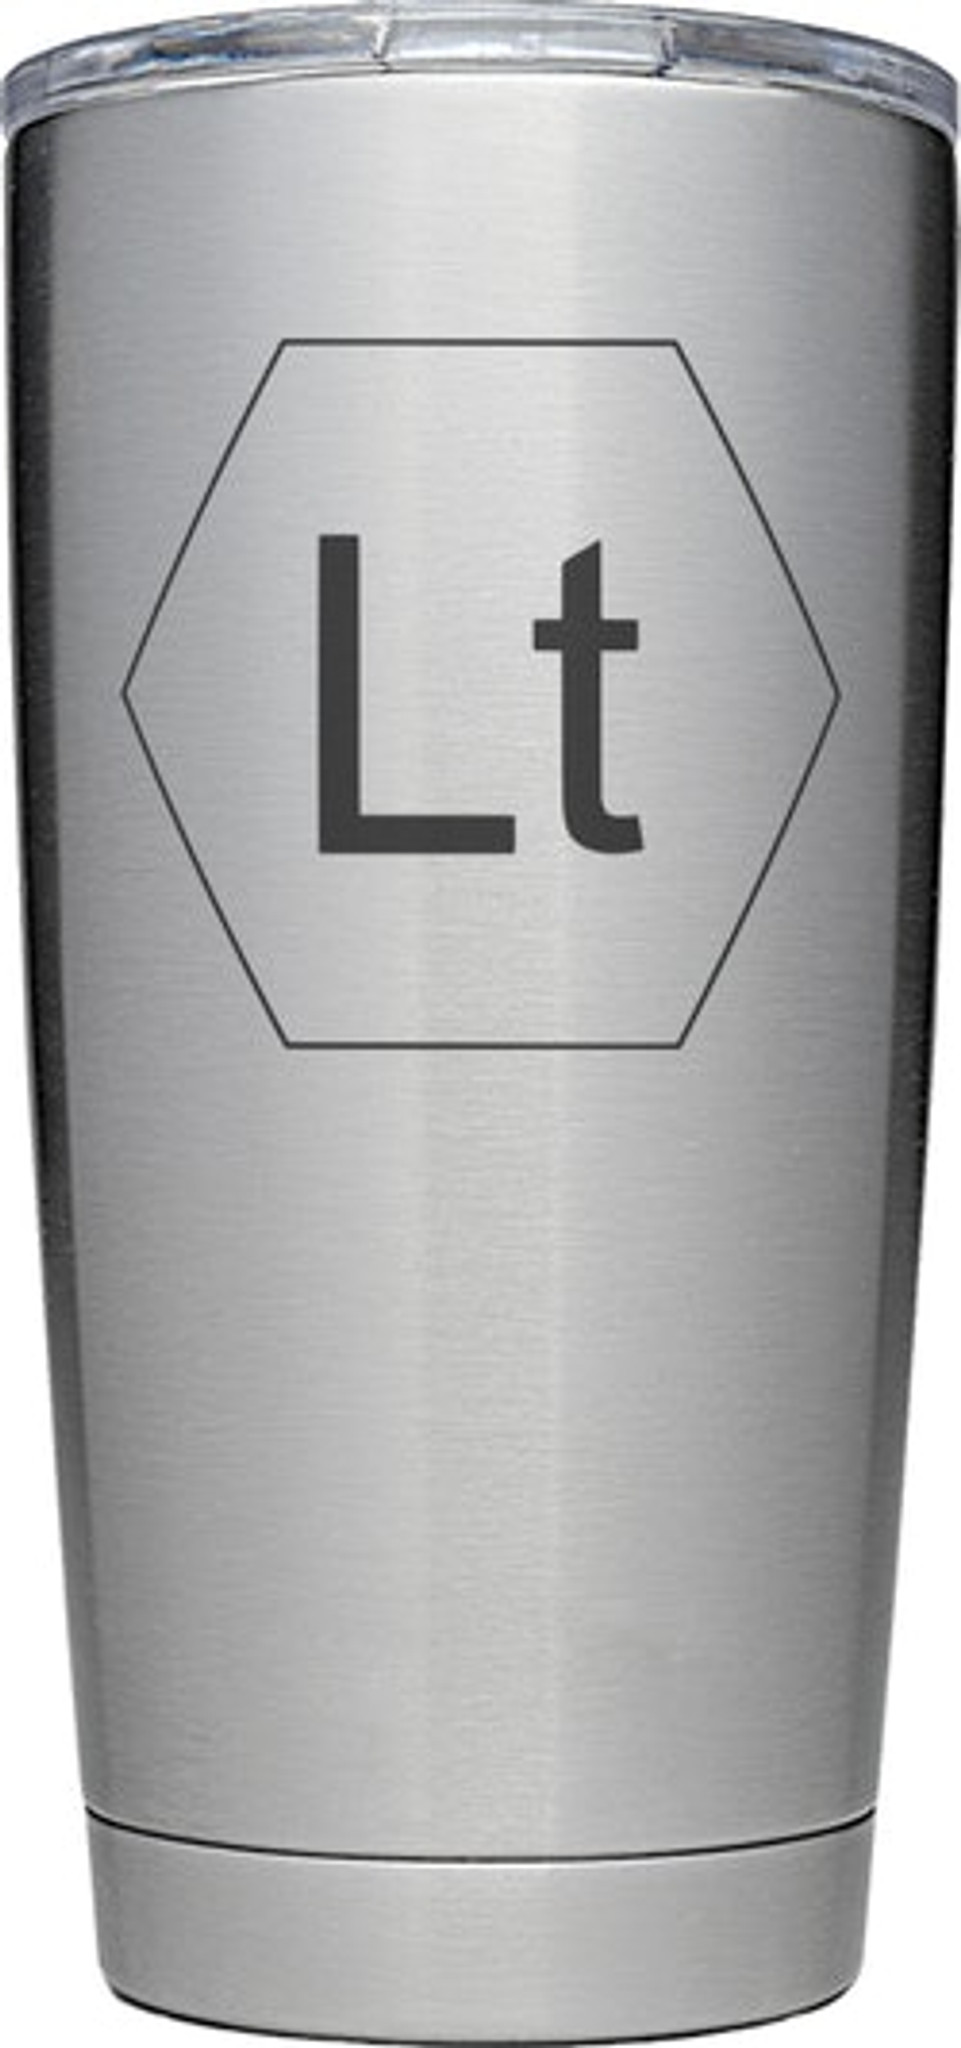 YETI-20-oz-silver-stainless-steel-tumbler-sand-blasted-engraved-personalized-logo-lazerworx